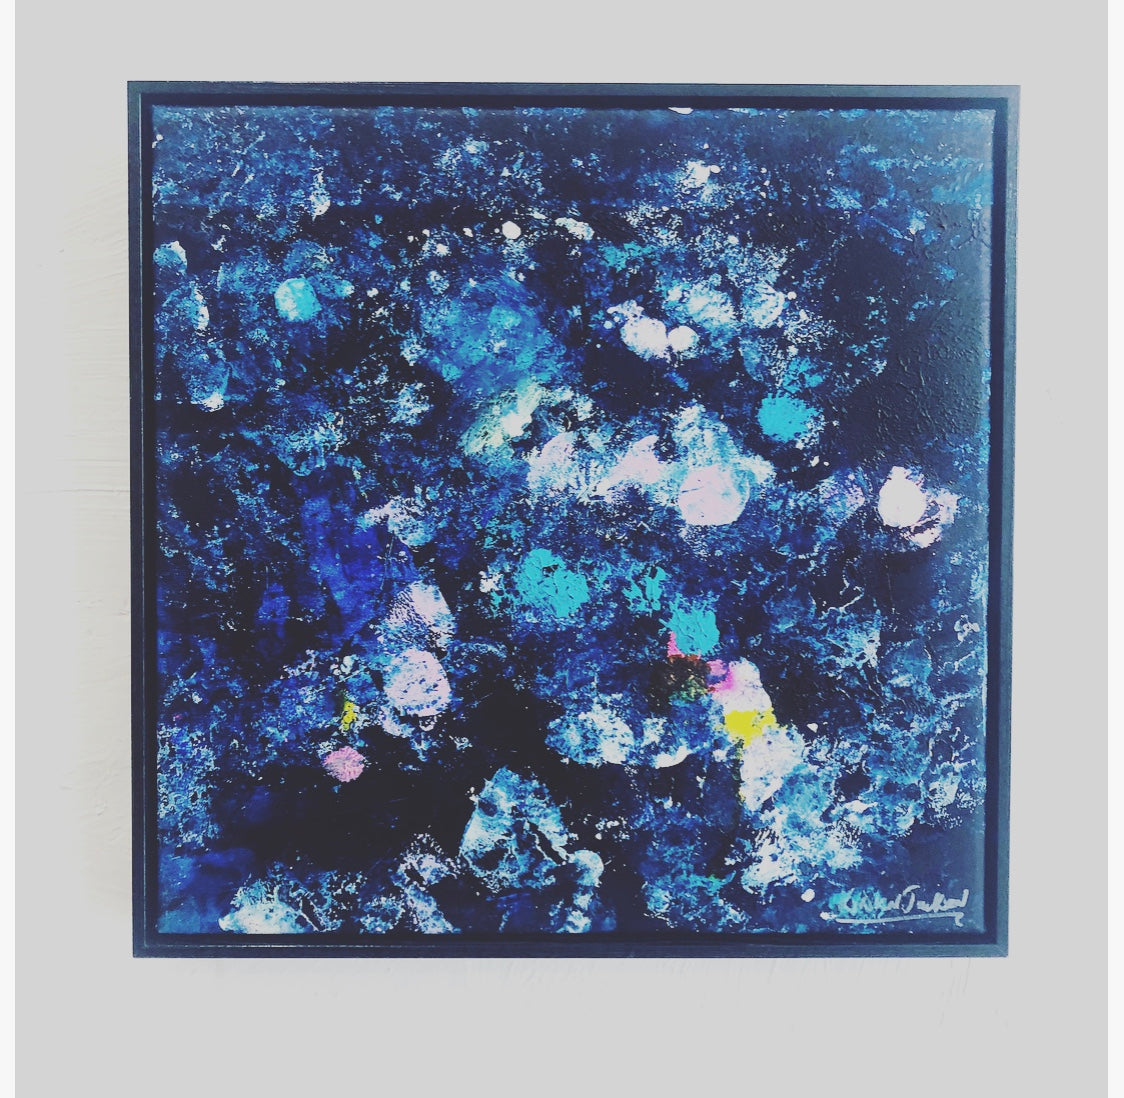 Blue Tango series #4  53cm x 53cm framed in a black oak frame